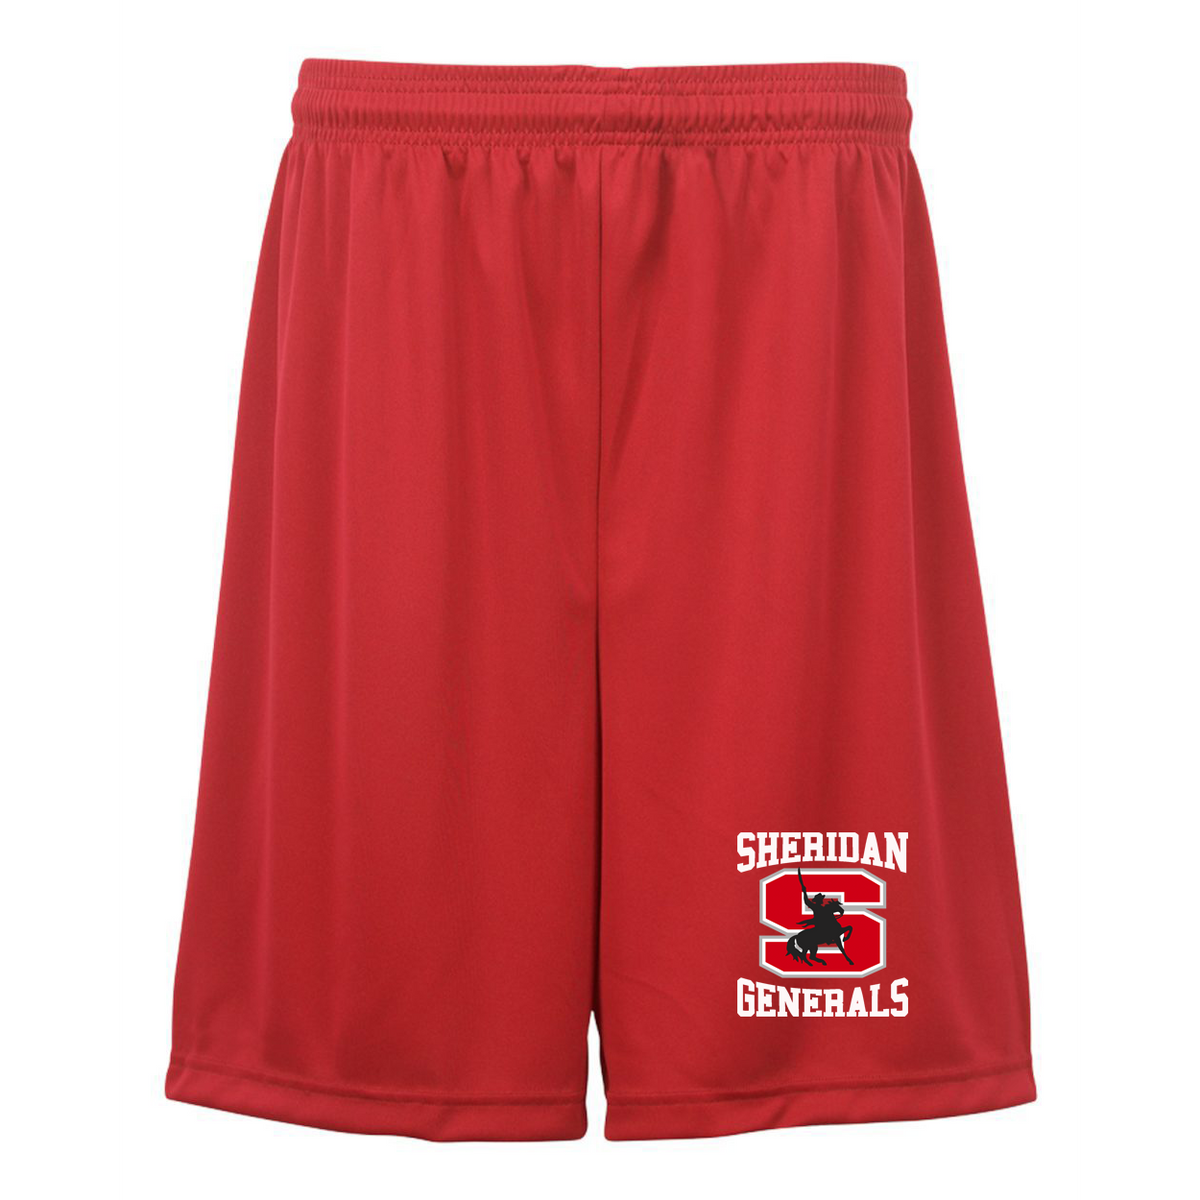 Sheridan Generals Shorts